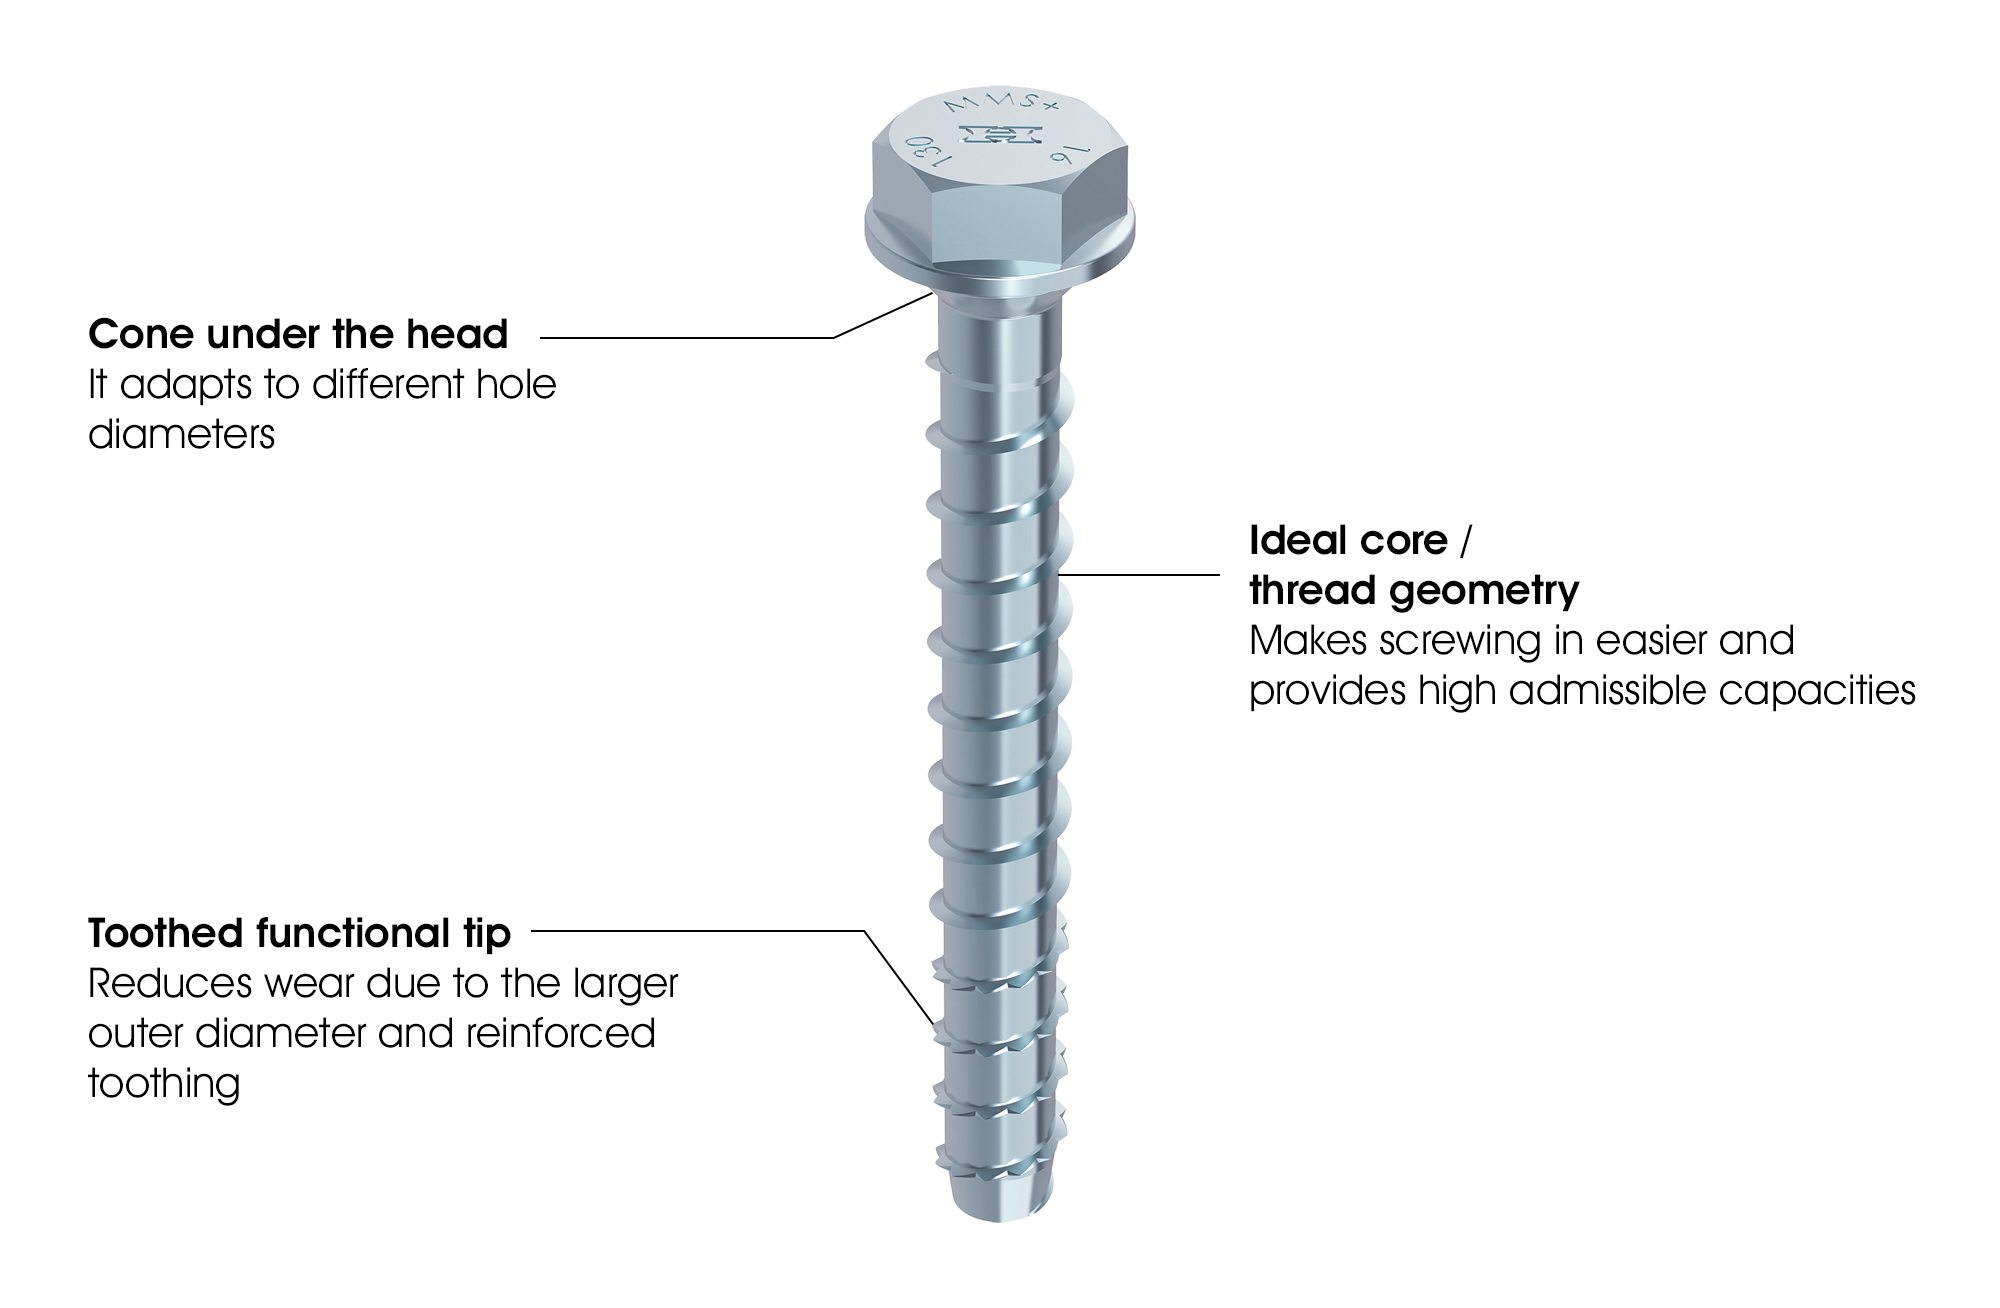 Details of the concrete screw